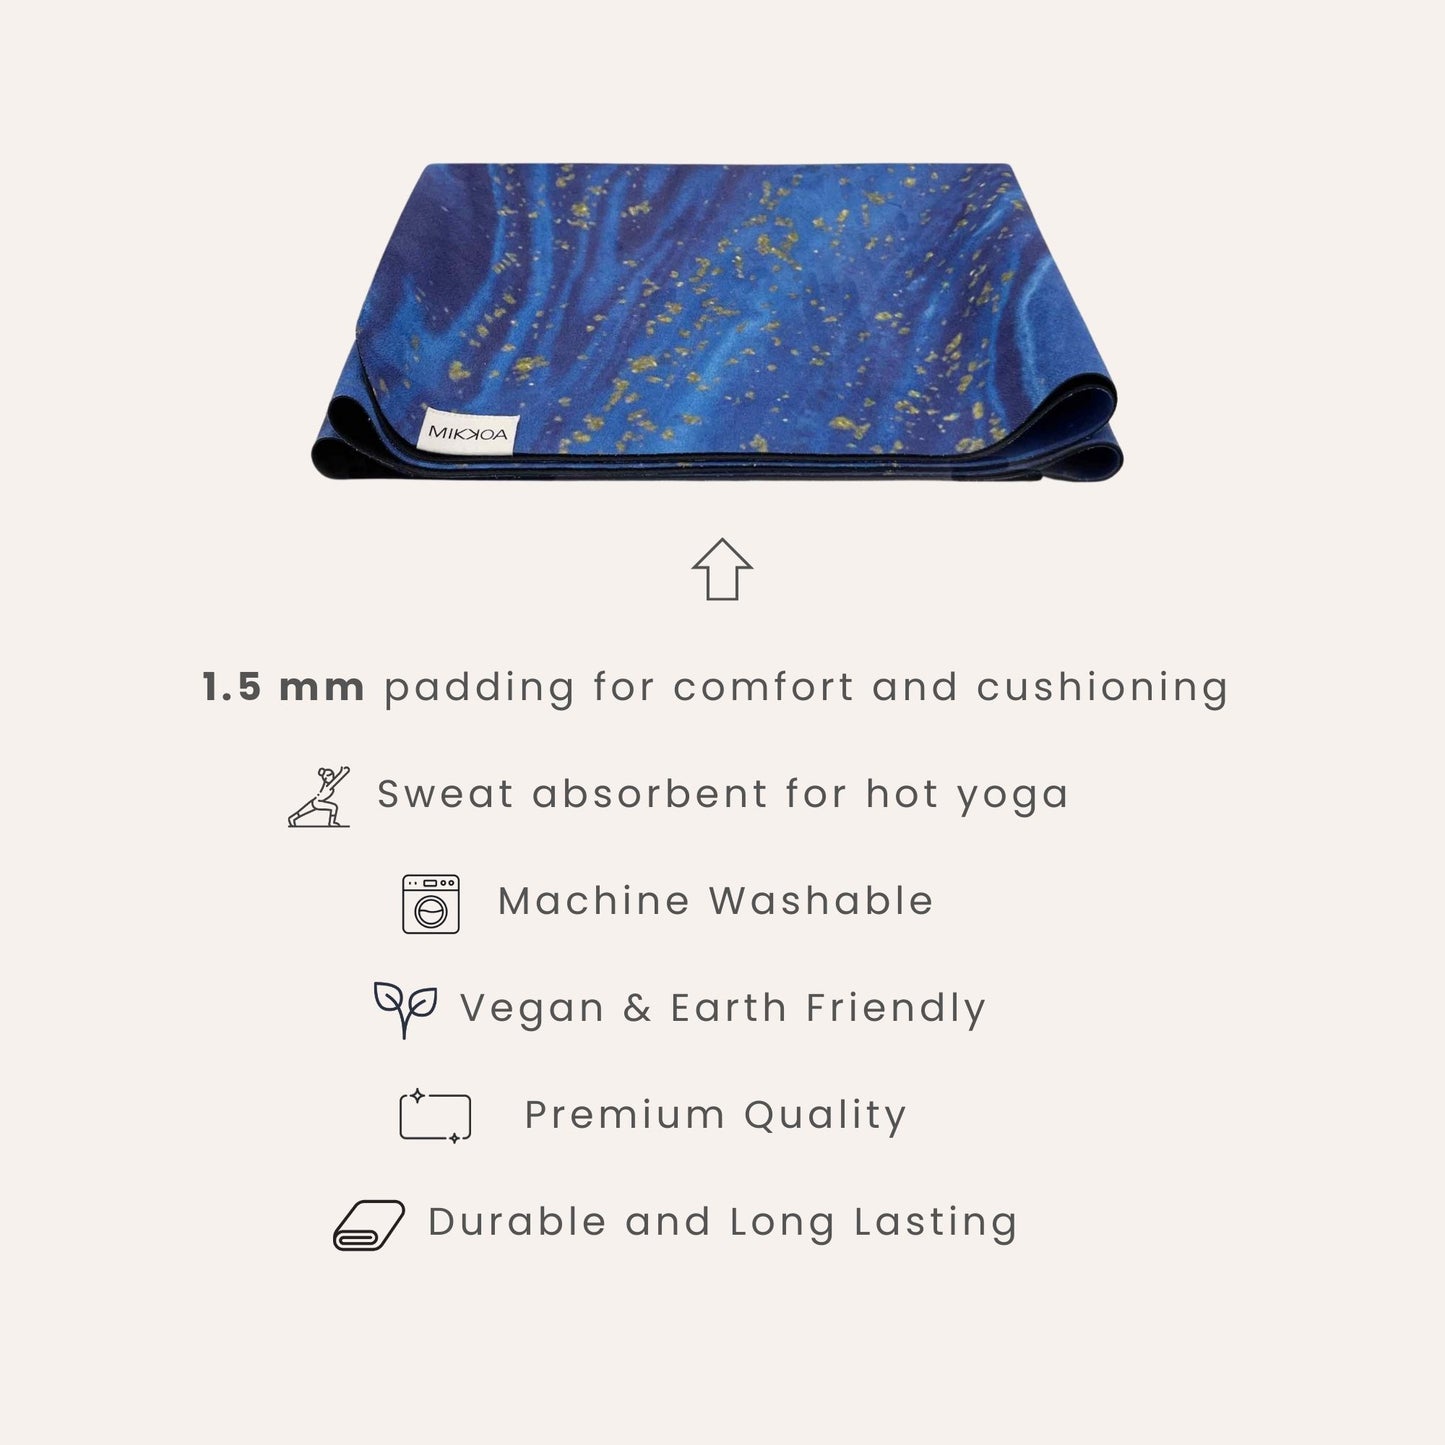 Folding Travel Yoga Mat-Blue Yoga Mat Features-Mikkoa Midnight Ocean Folding Travel Yoga Mat